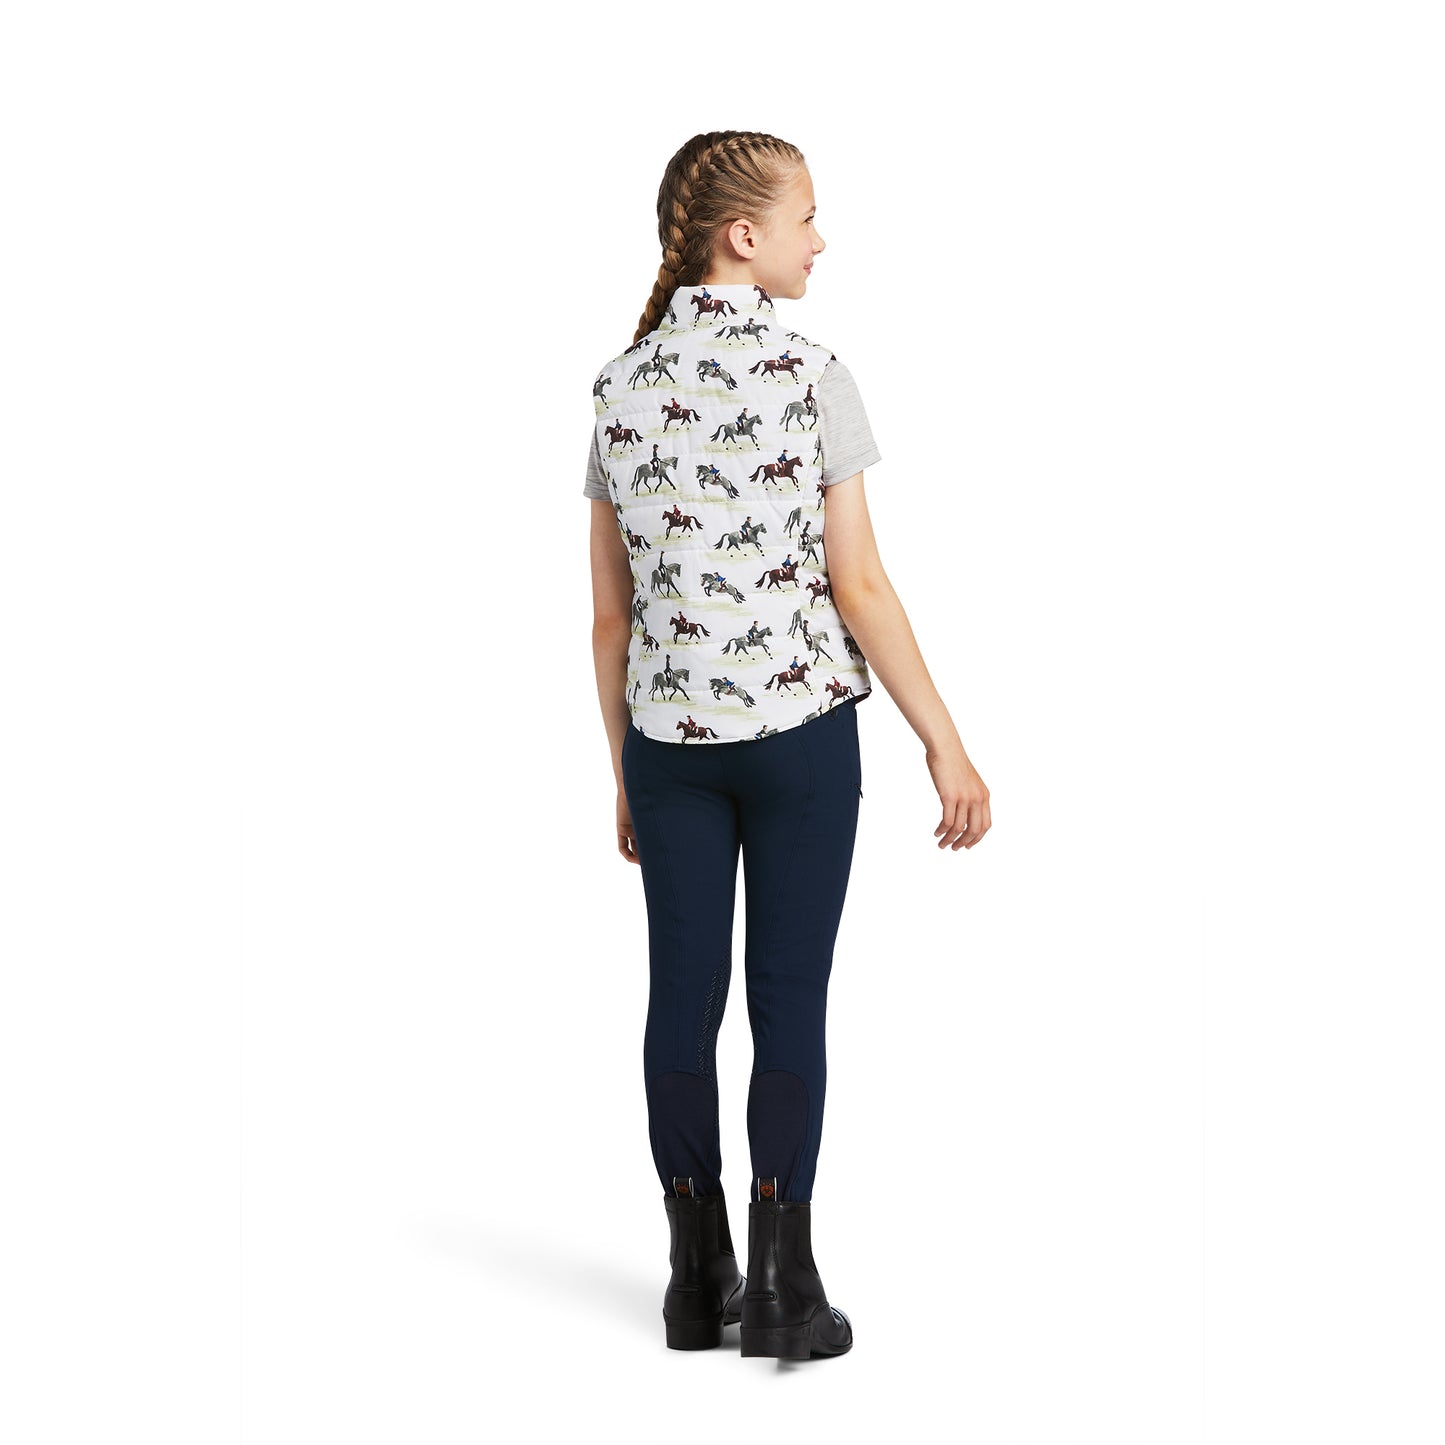 Ariat® Youth Girl's Bella Horse Print Reversible Vest 10039220